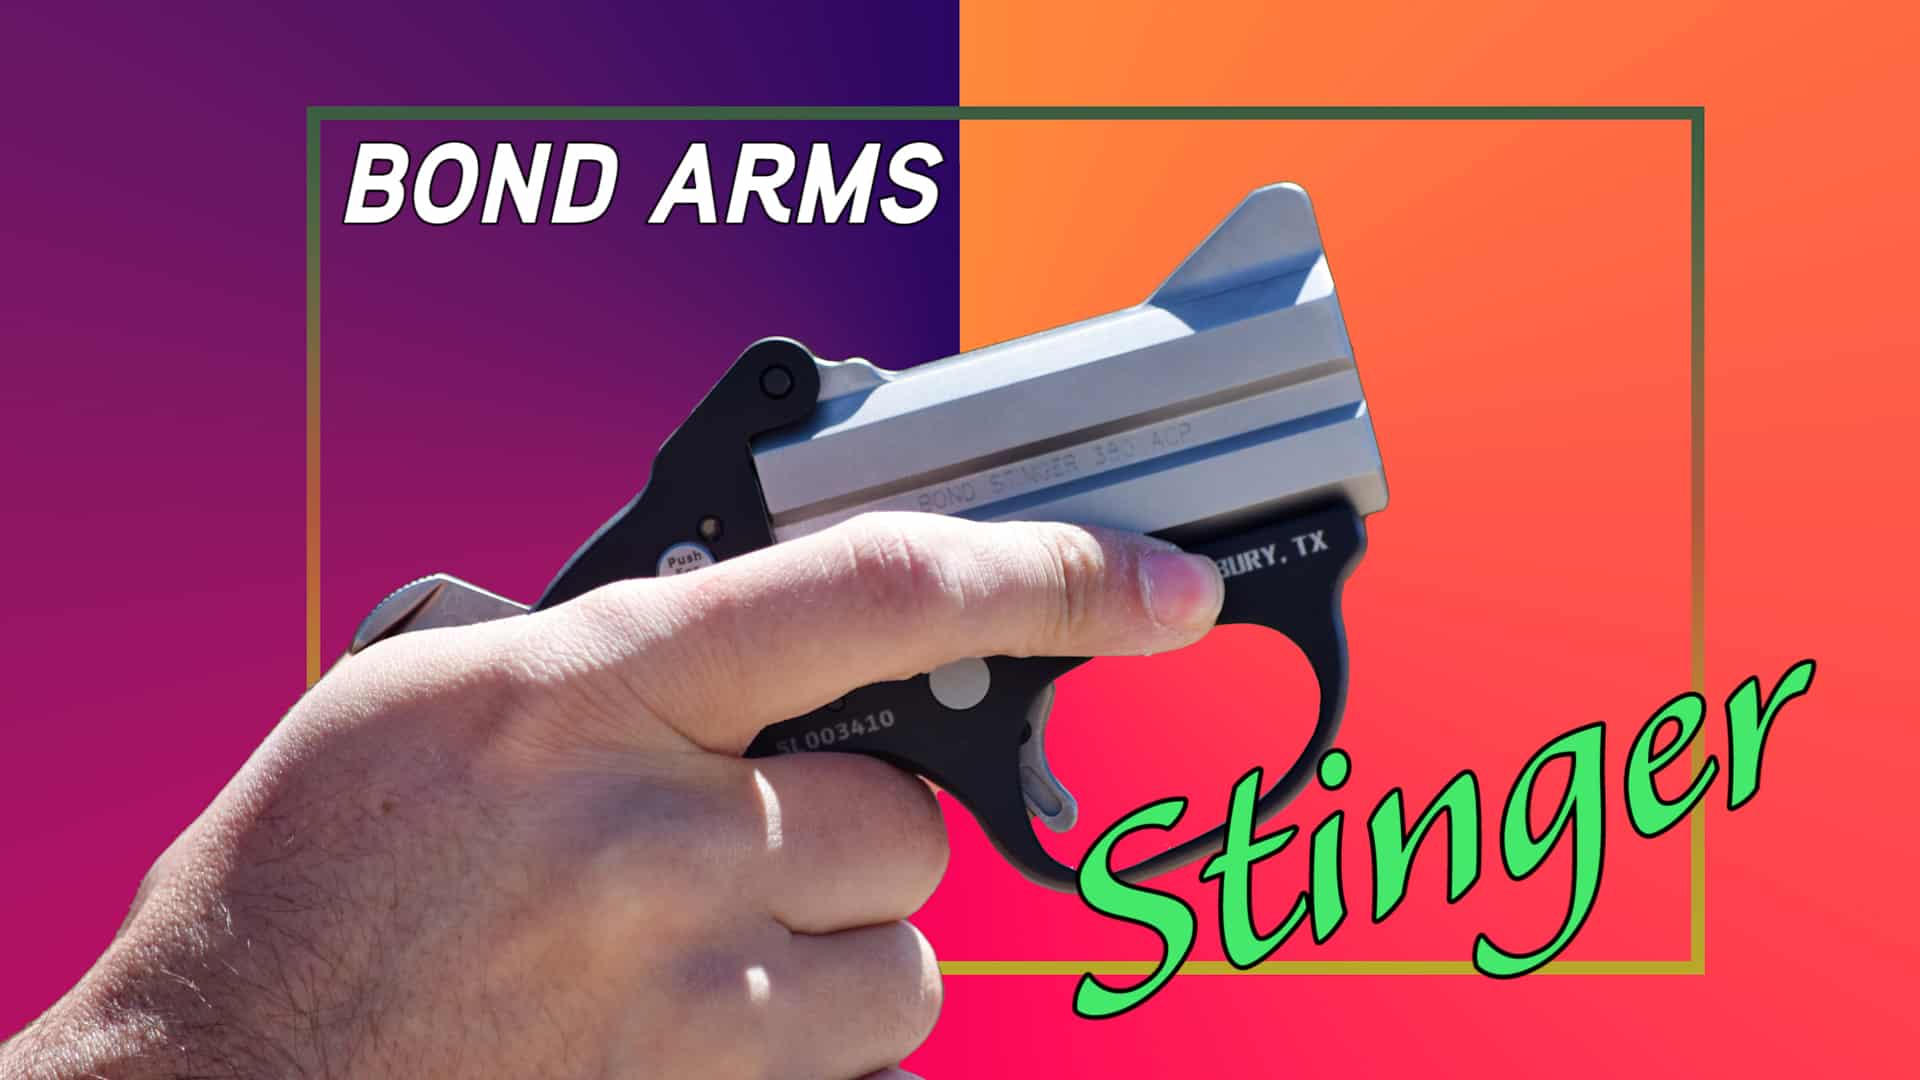 Review of Bond Arms Stinger